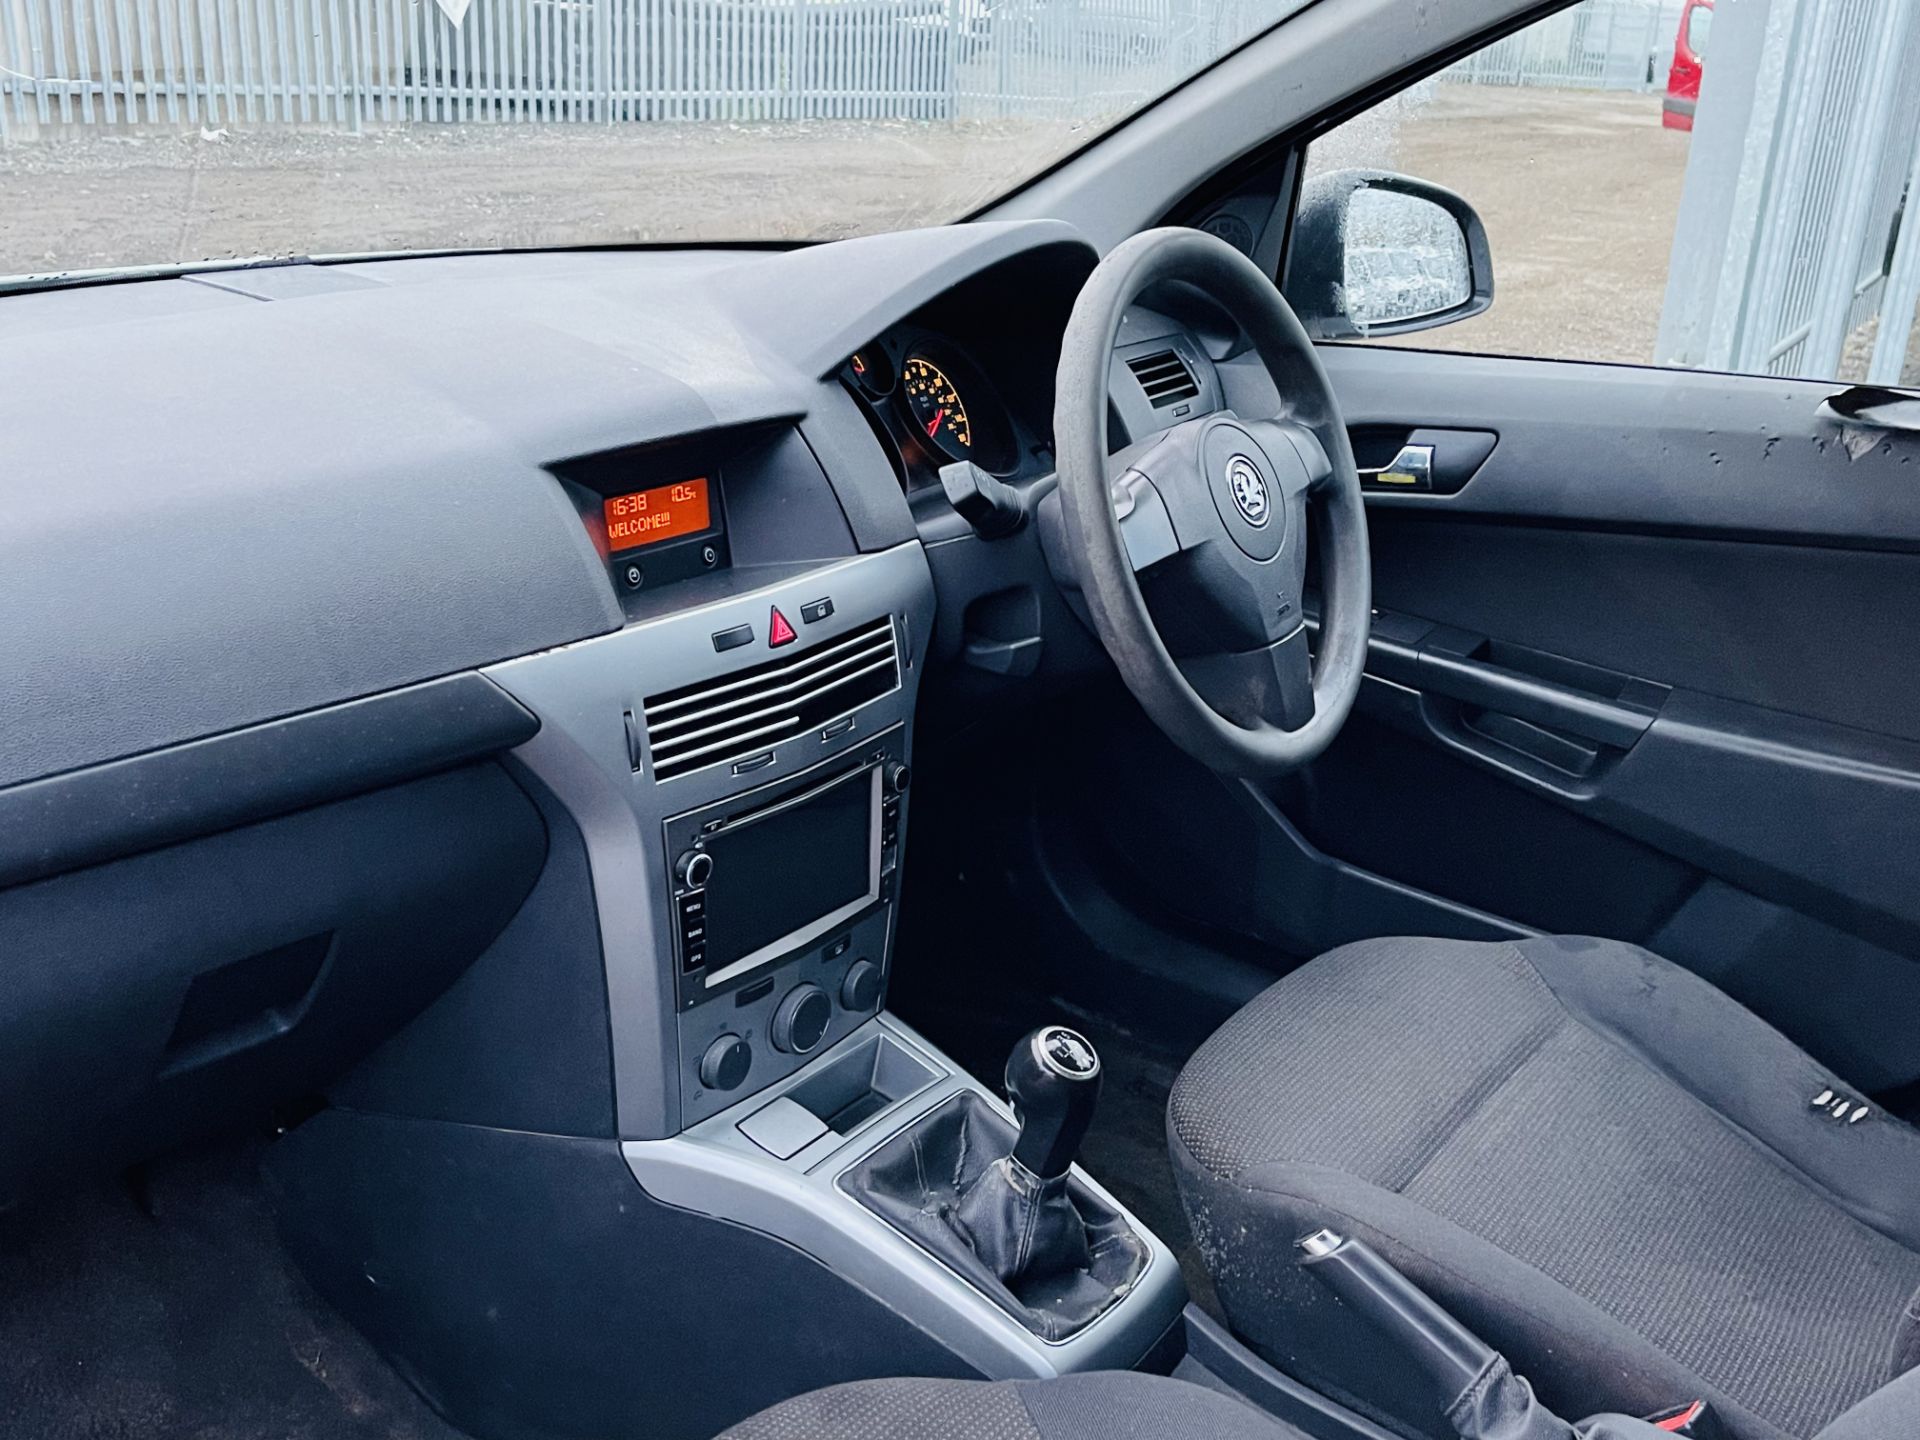 Vauxhall Astra 1.7 CDTI 110 Eco-Flex 2012 '61 Reg' Panel Van - Sat Nav - Image 8 of 19